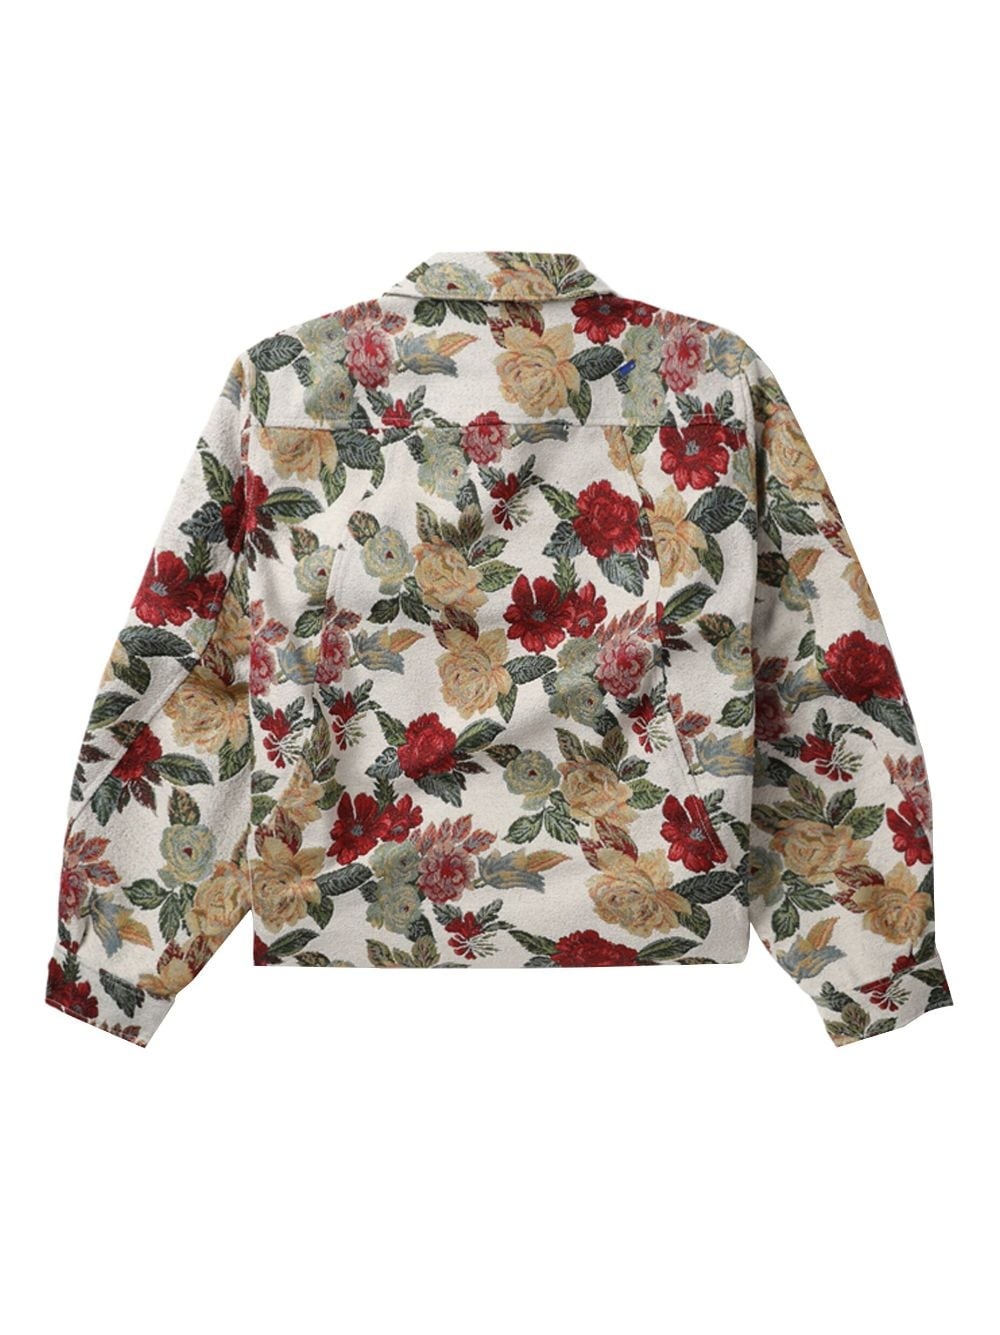 embroidered-floral shirt jacket - 6